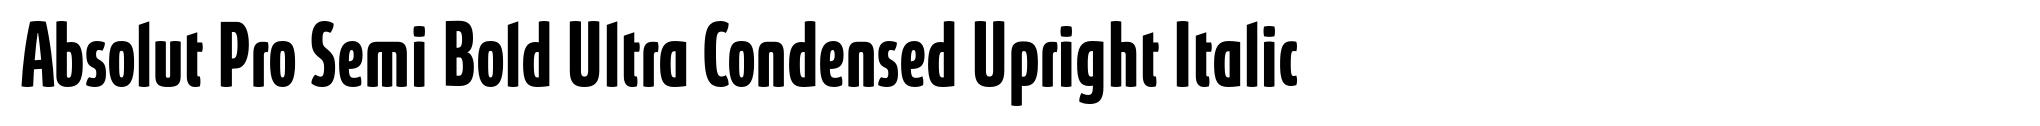 Absolut Pro Semi Bold Ultra Condensed Upright Italic image